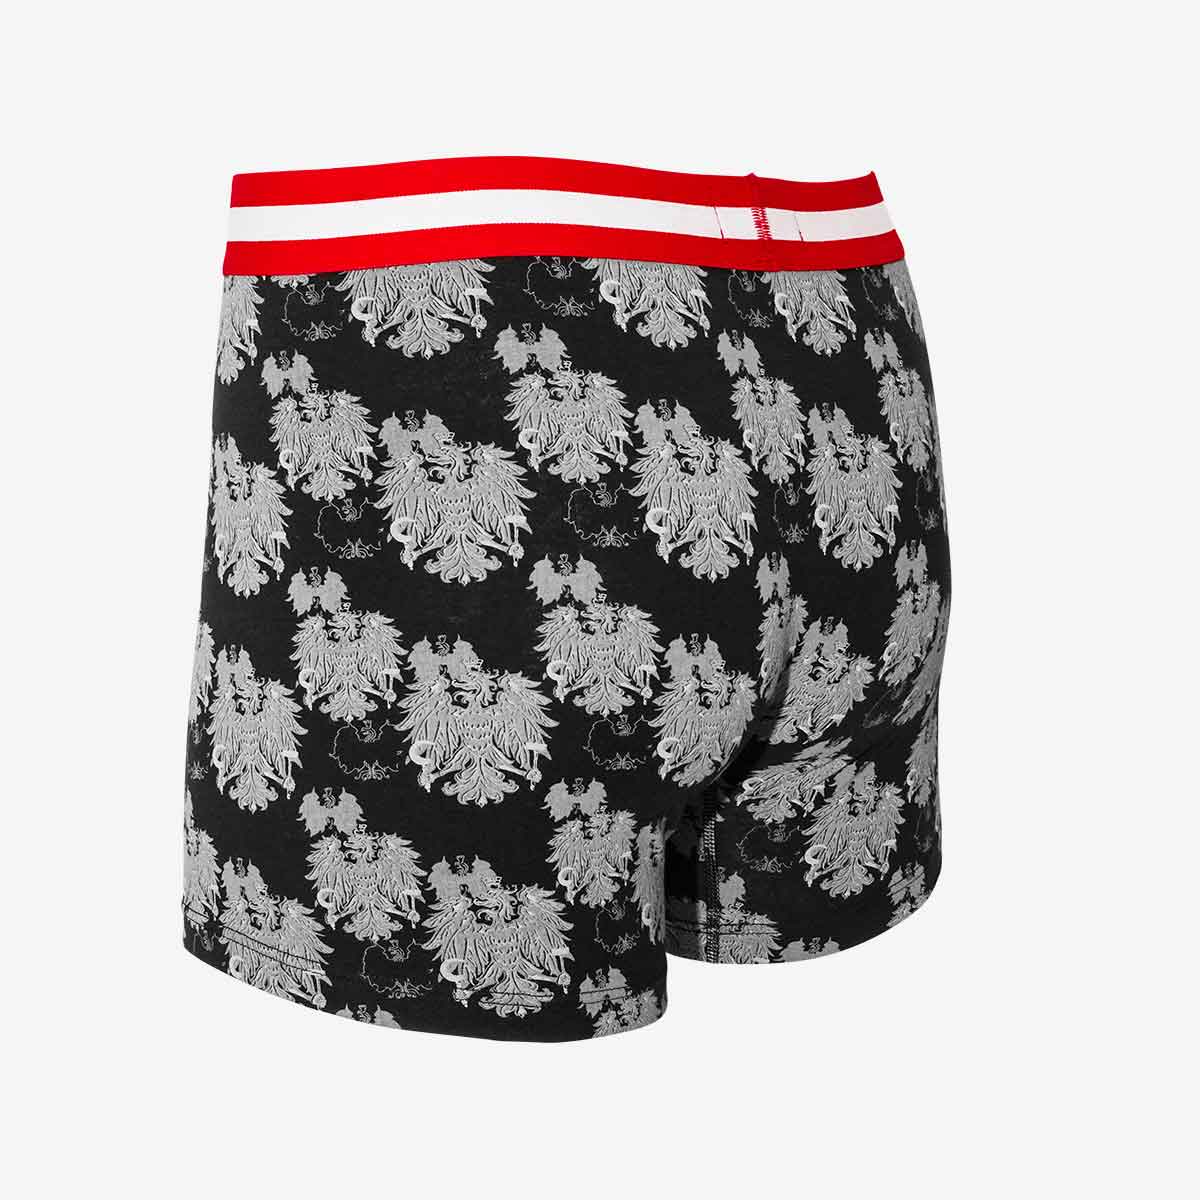 Austria Boxer Shorts